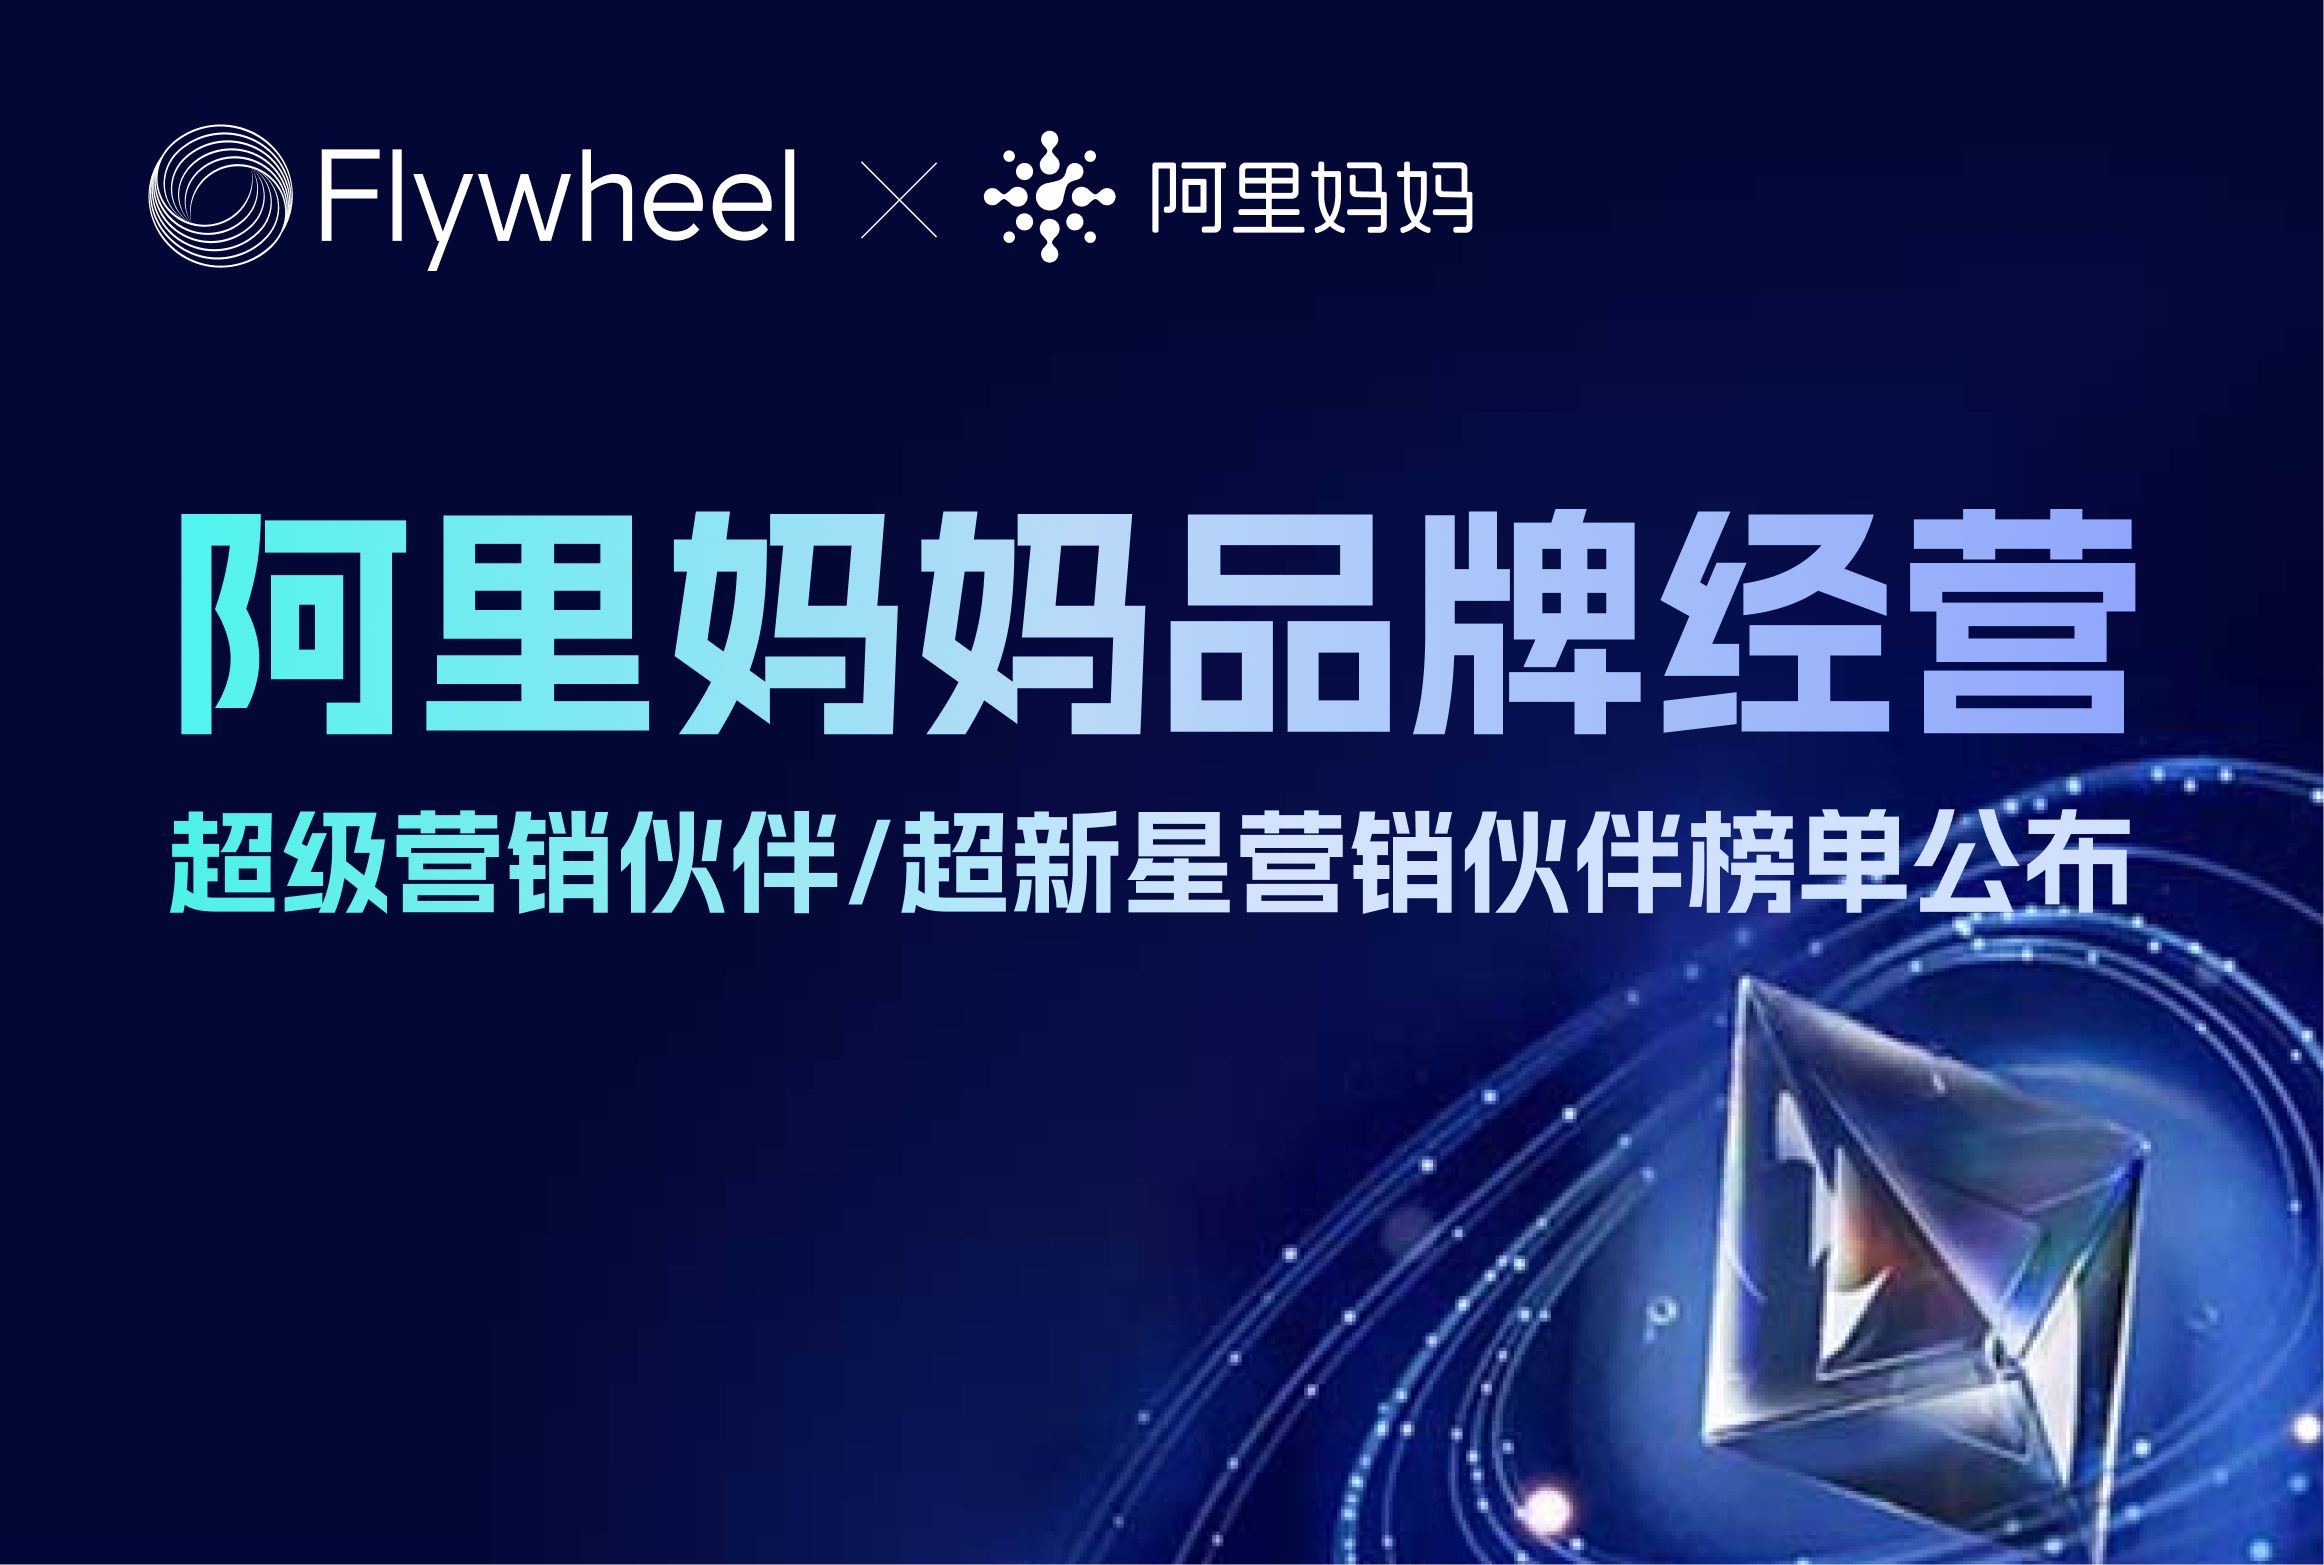 Flywheel飞未荣获阿里妈妈品牌经营赛道「超新星营销伙伴」认证